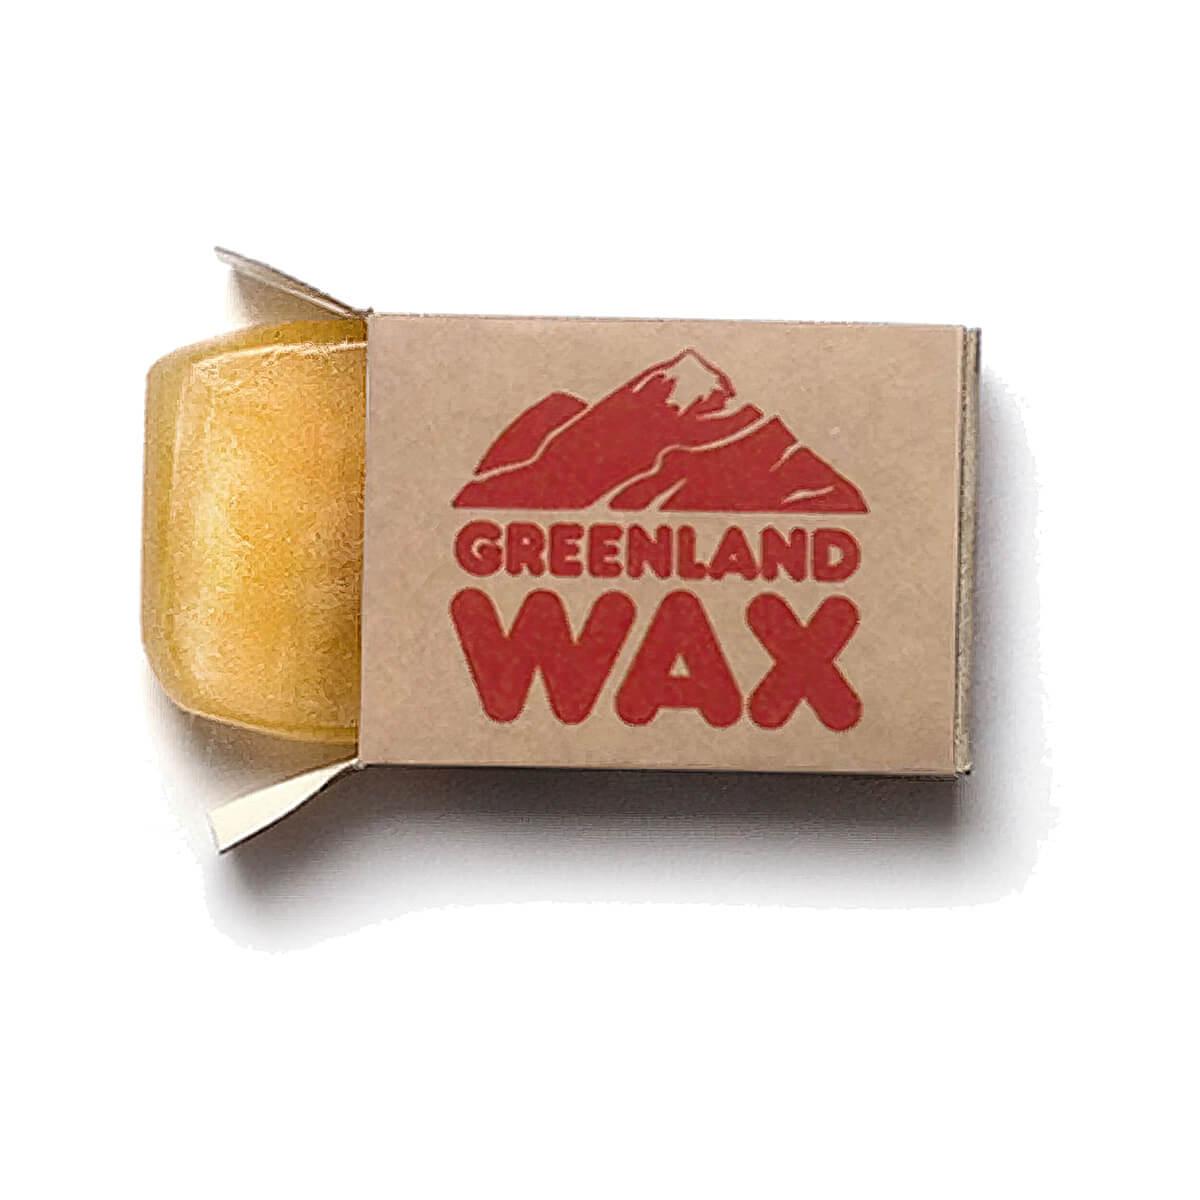  Greenland Wax Travel Pack